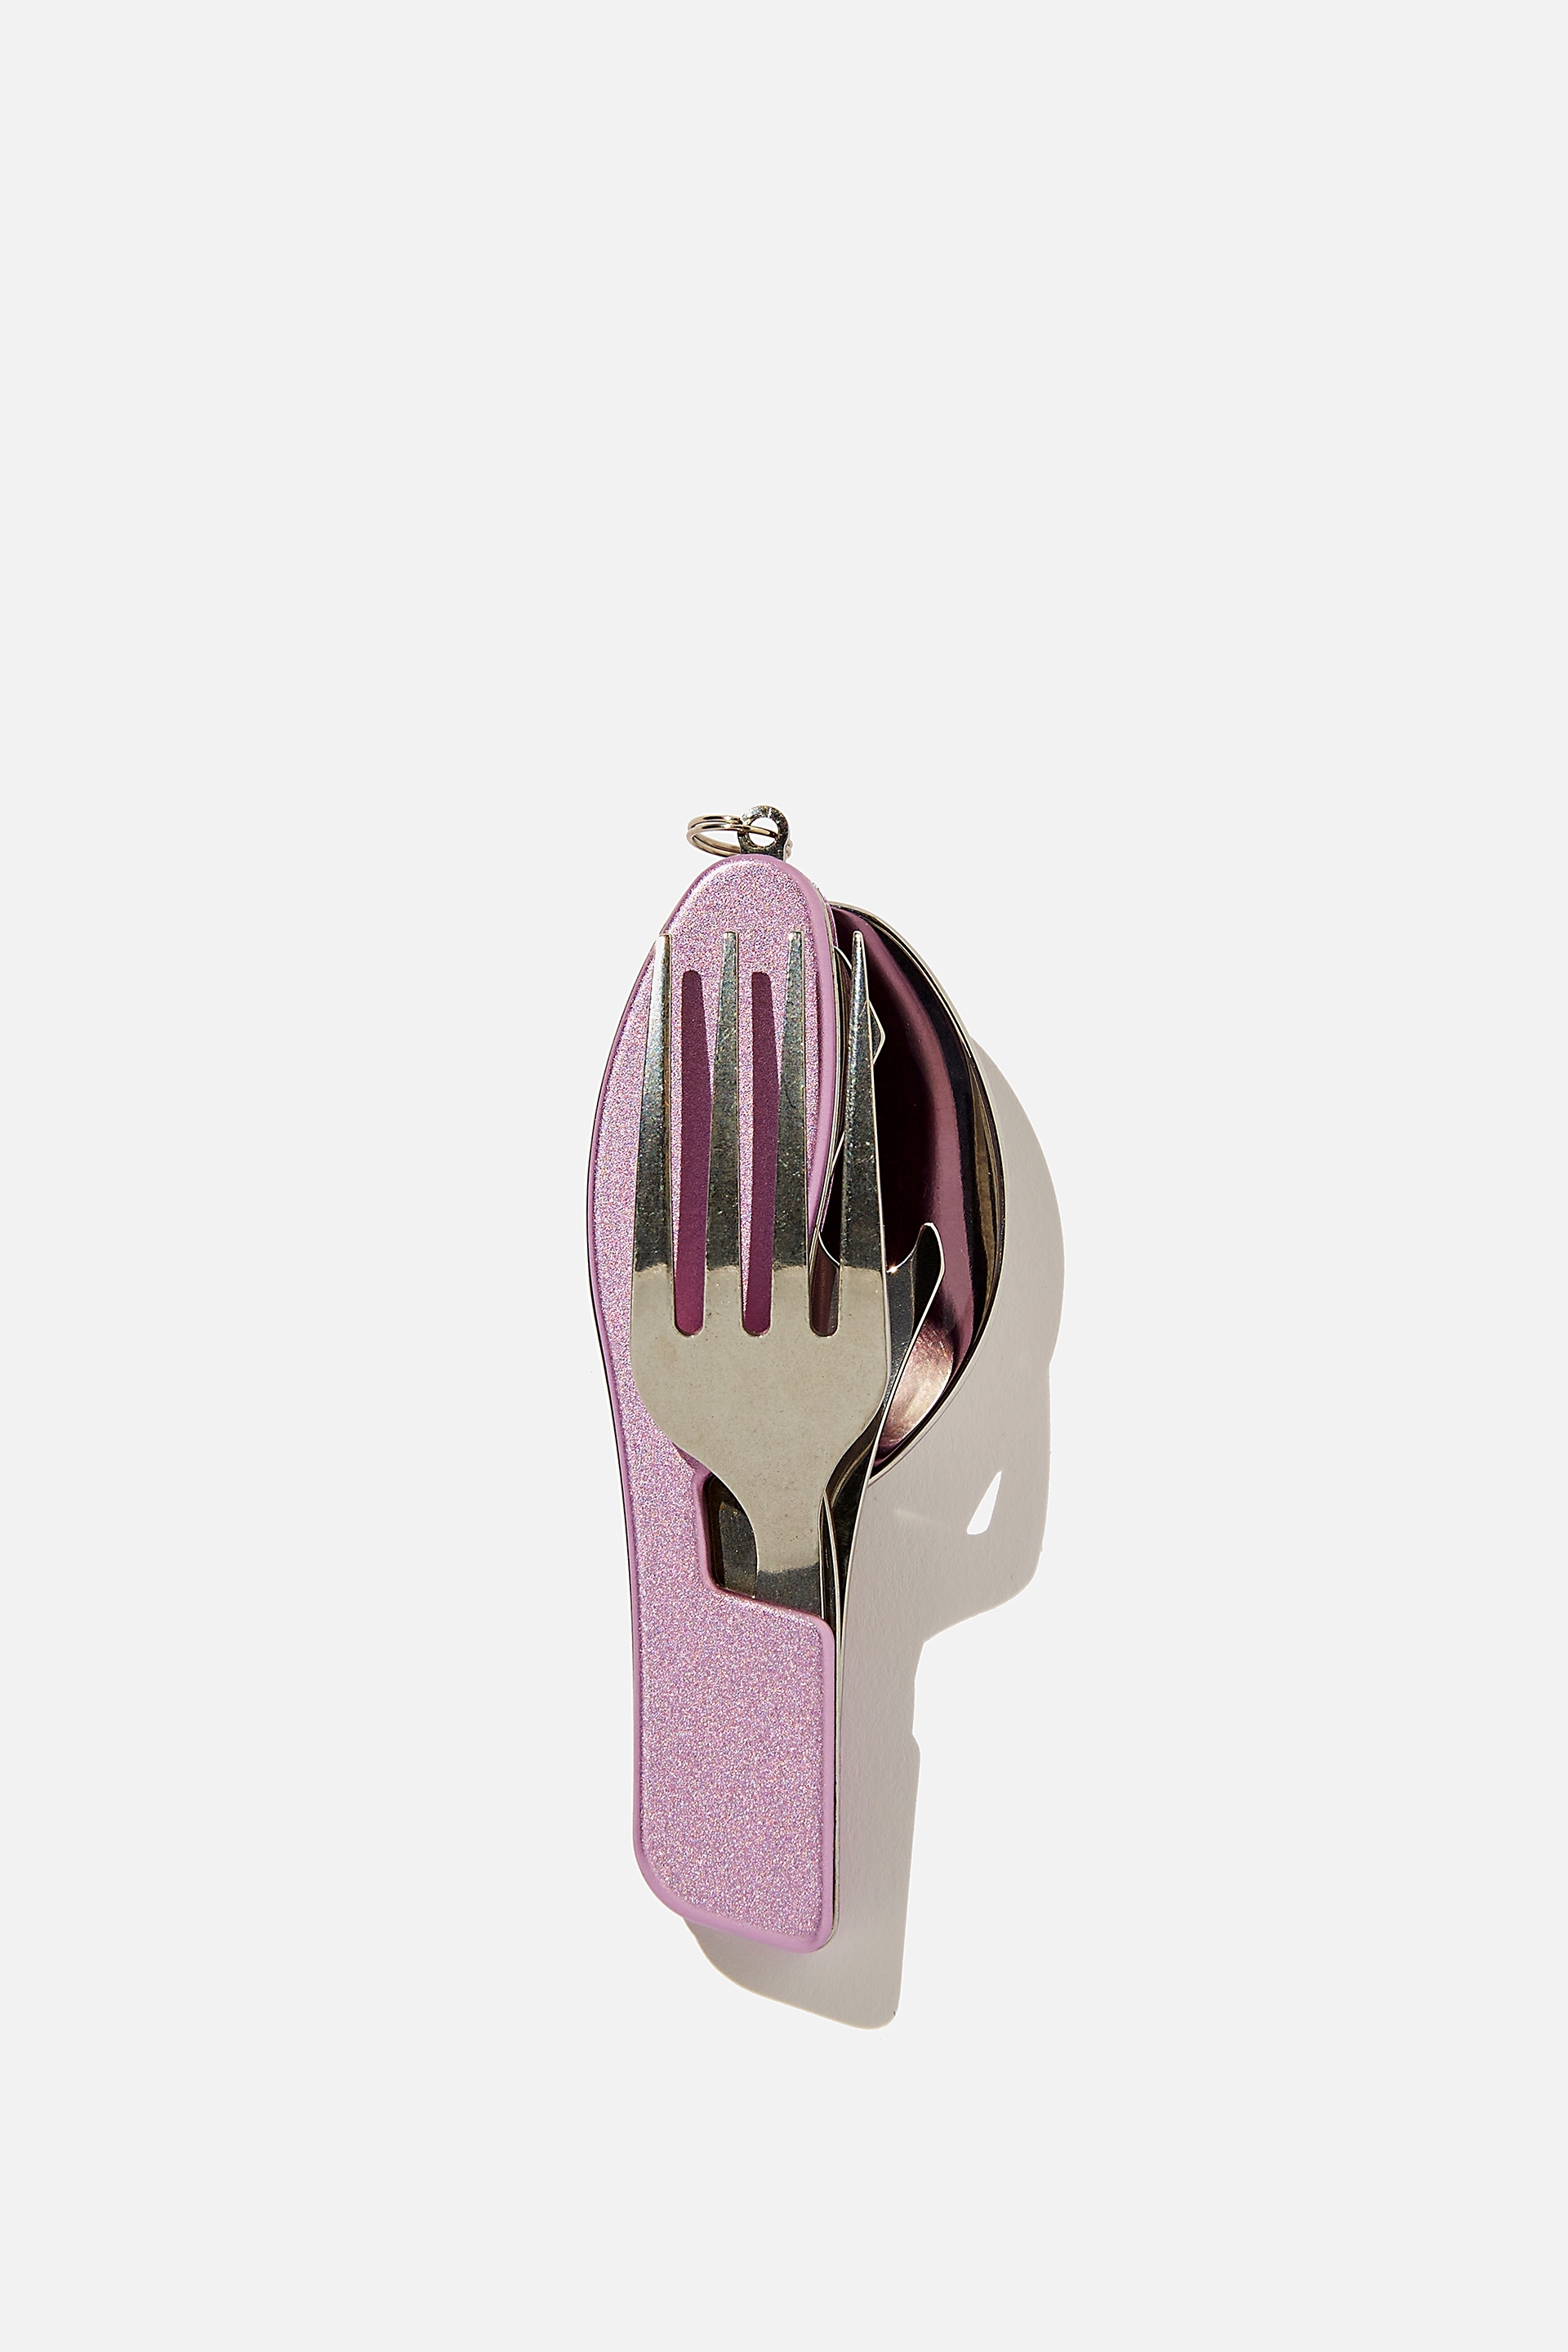 Typo - Pocket Cutlery Set - Pale lilac